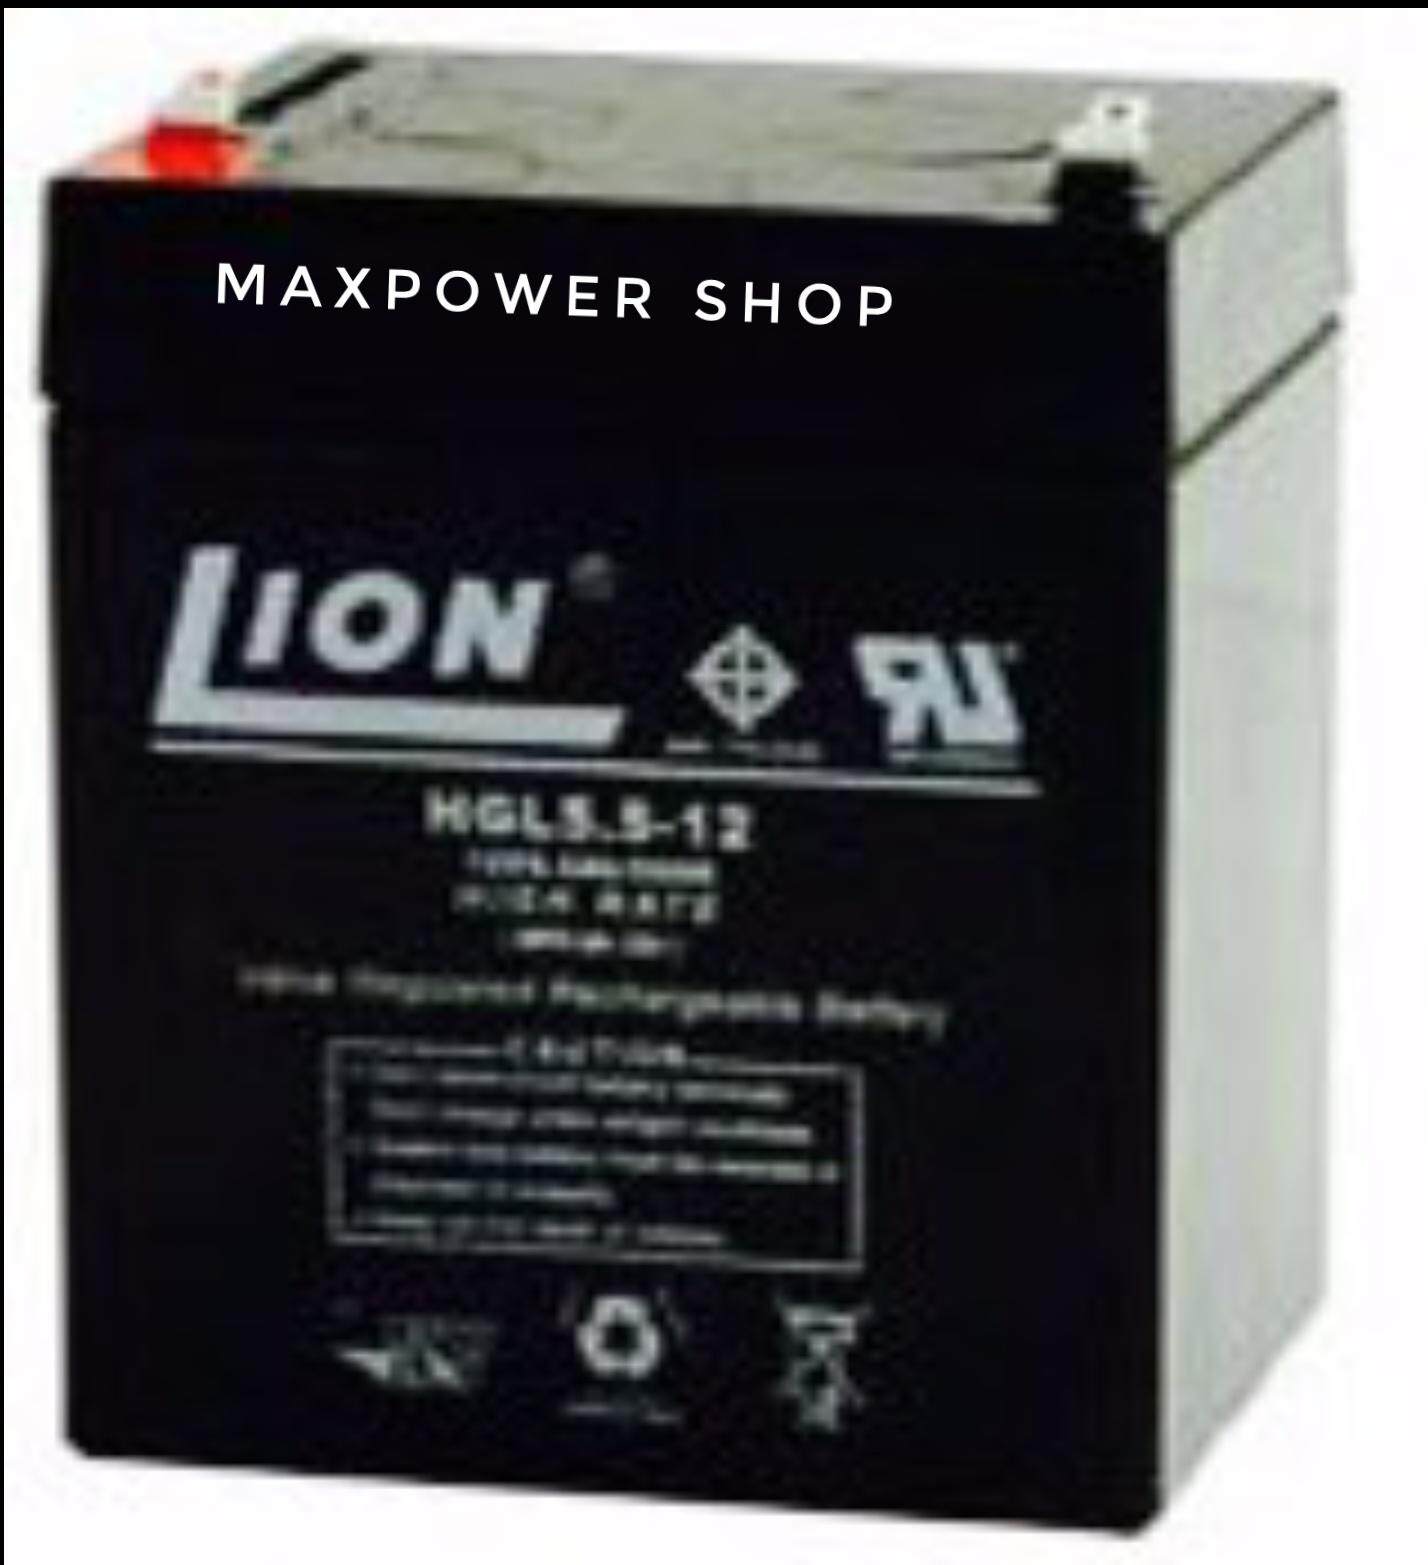 Maxpower แบตเตอรี่ ยูพีเอส Battery UPS แบตเตอรี่แห้ง ขนาด 12V 5.5 ah มาตรฐาน มอก. รุ่น lion 12v 5.5 ah